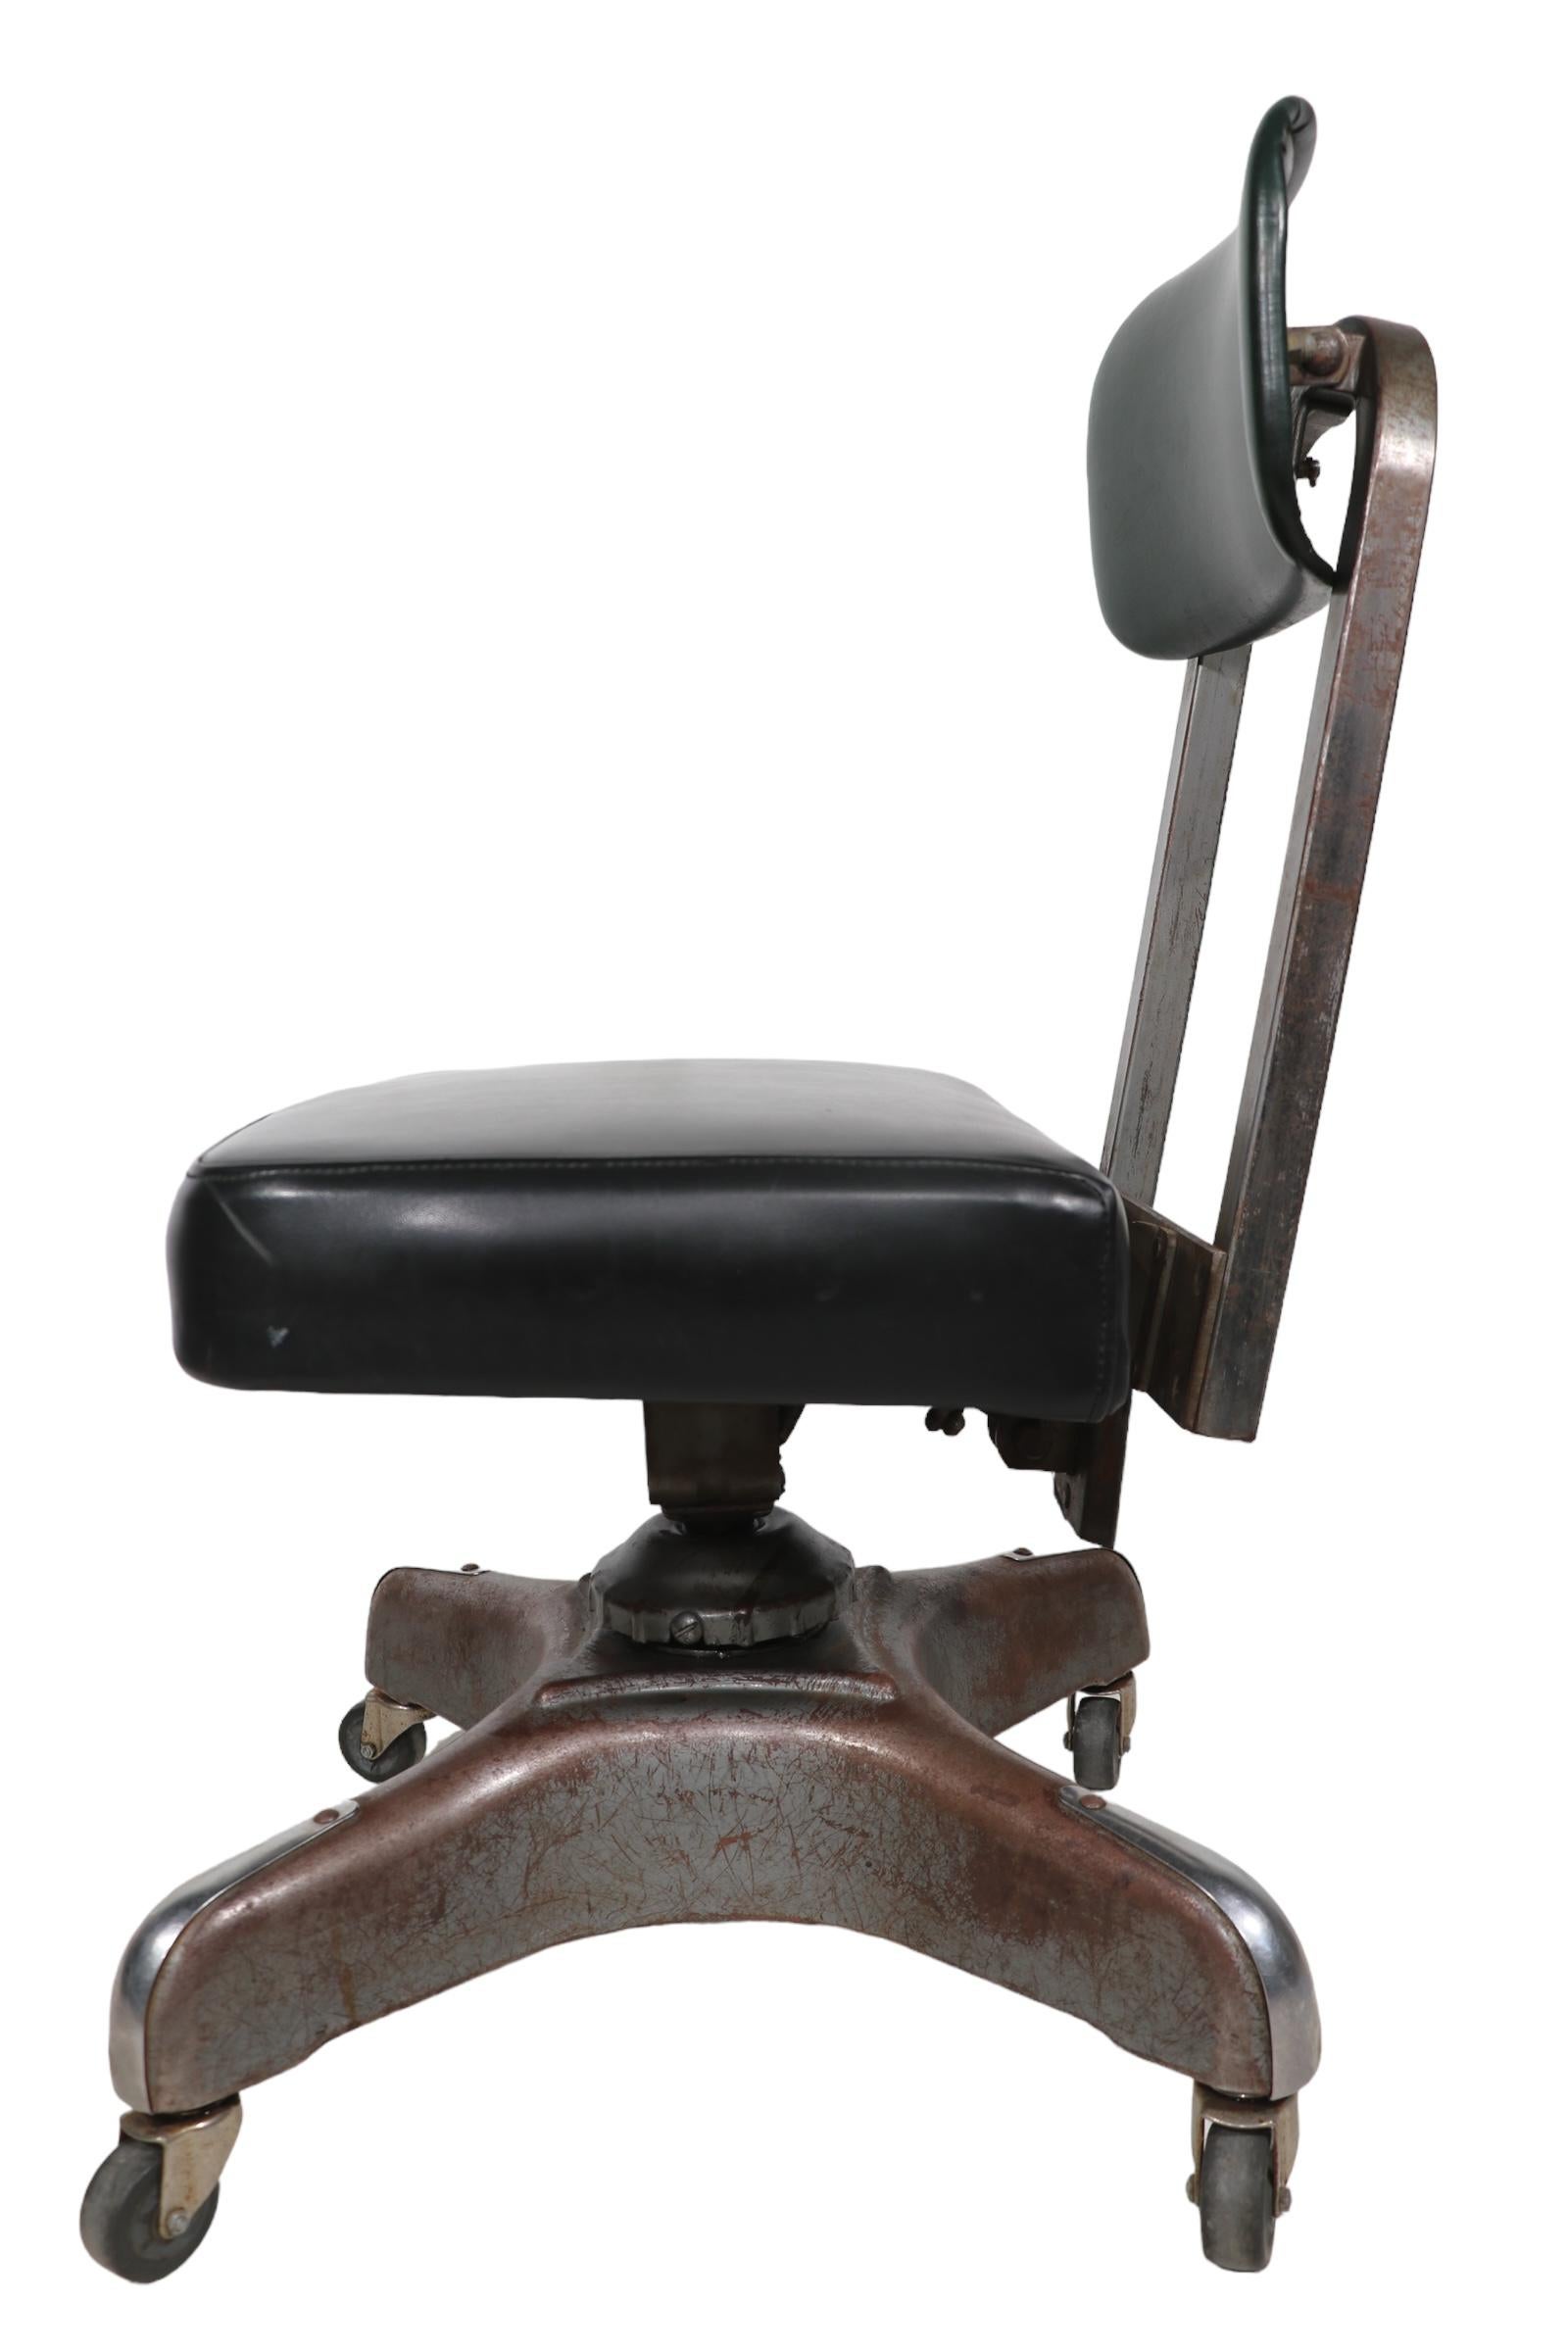 Art Deco Industrial Swivel Tilt Armless Desk Chair by Harter Corporation 1930/40 For Sale 8